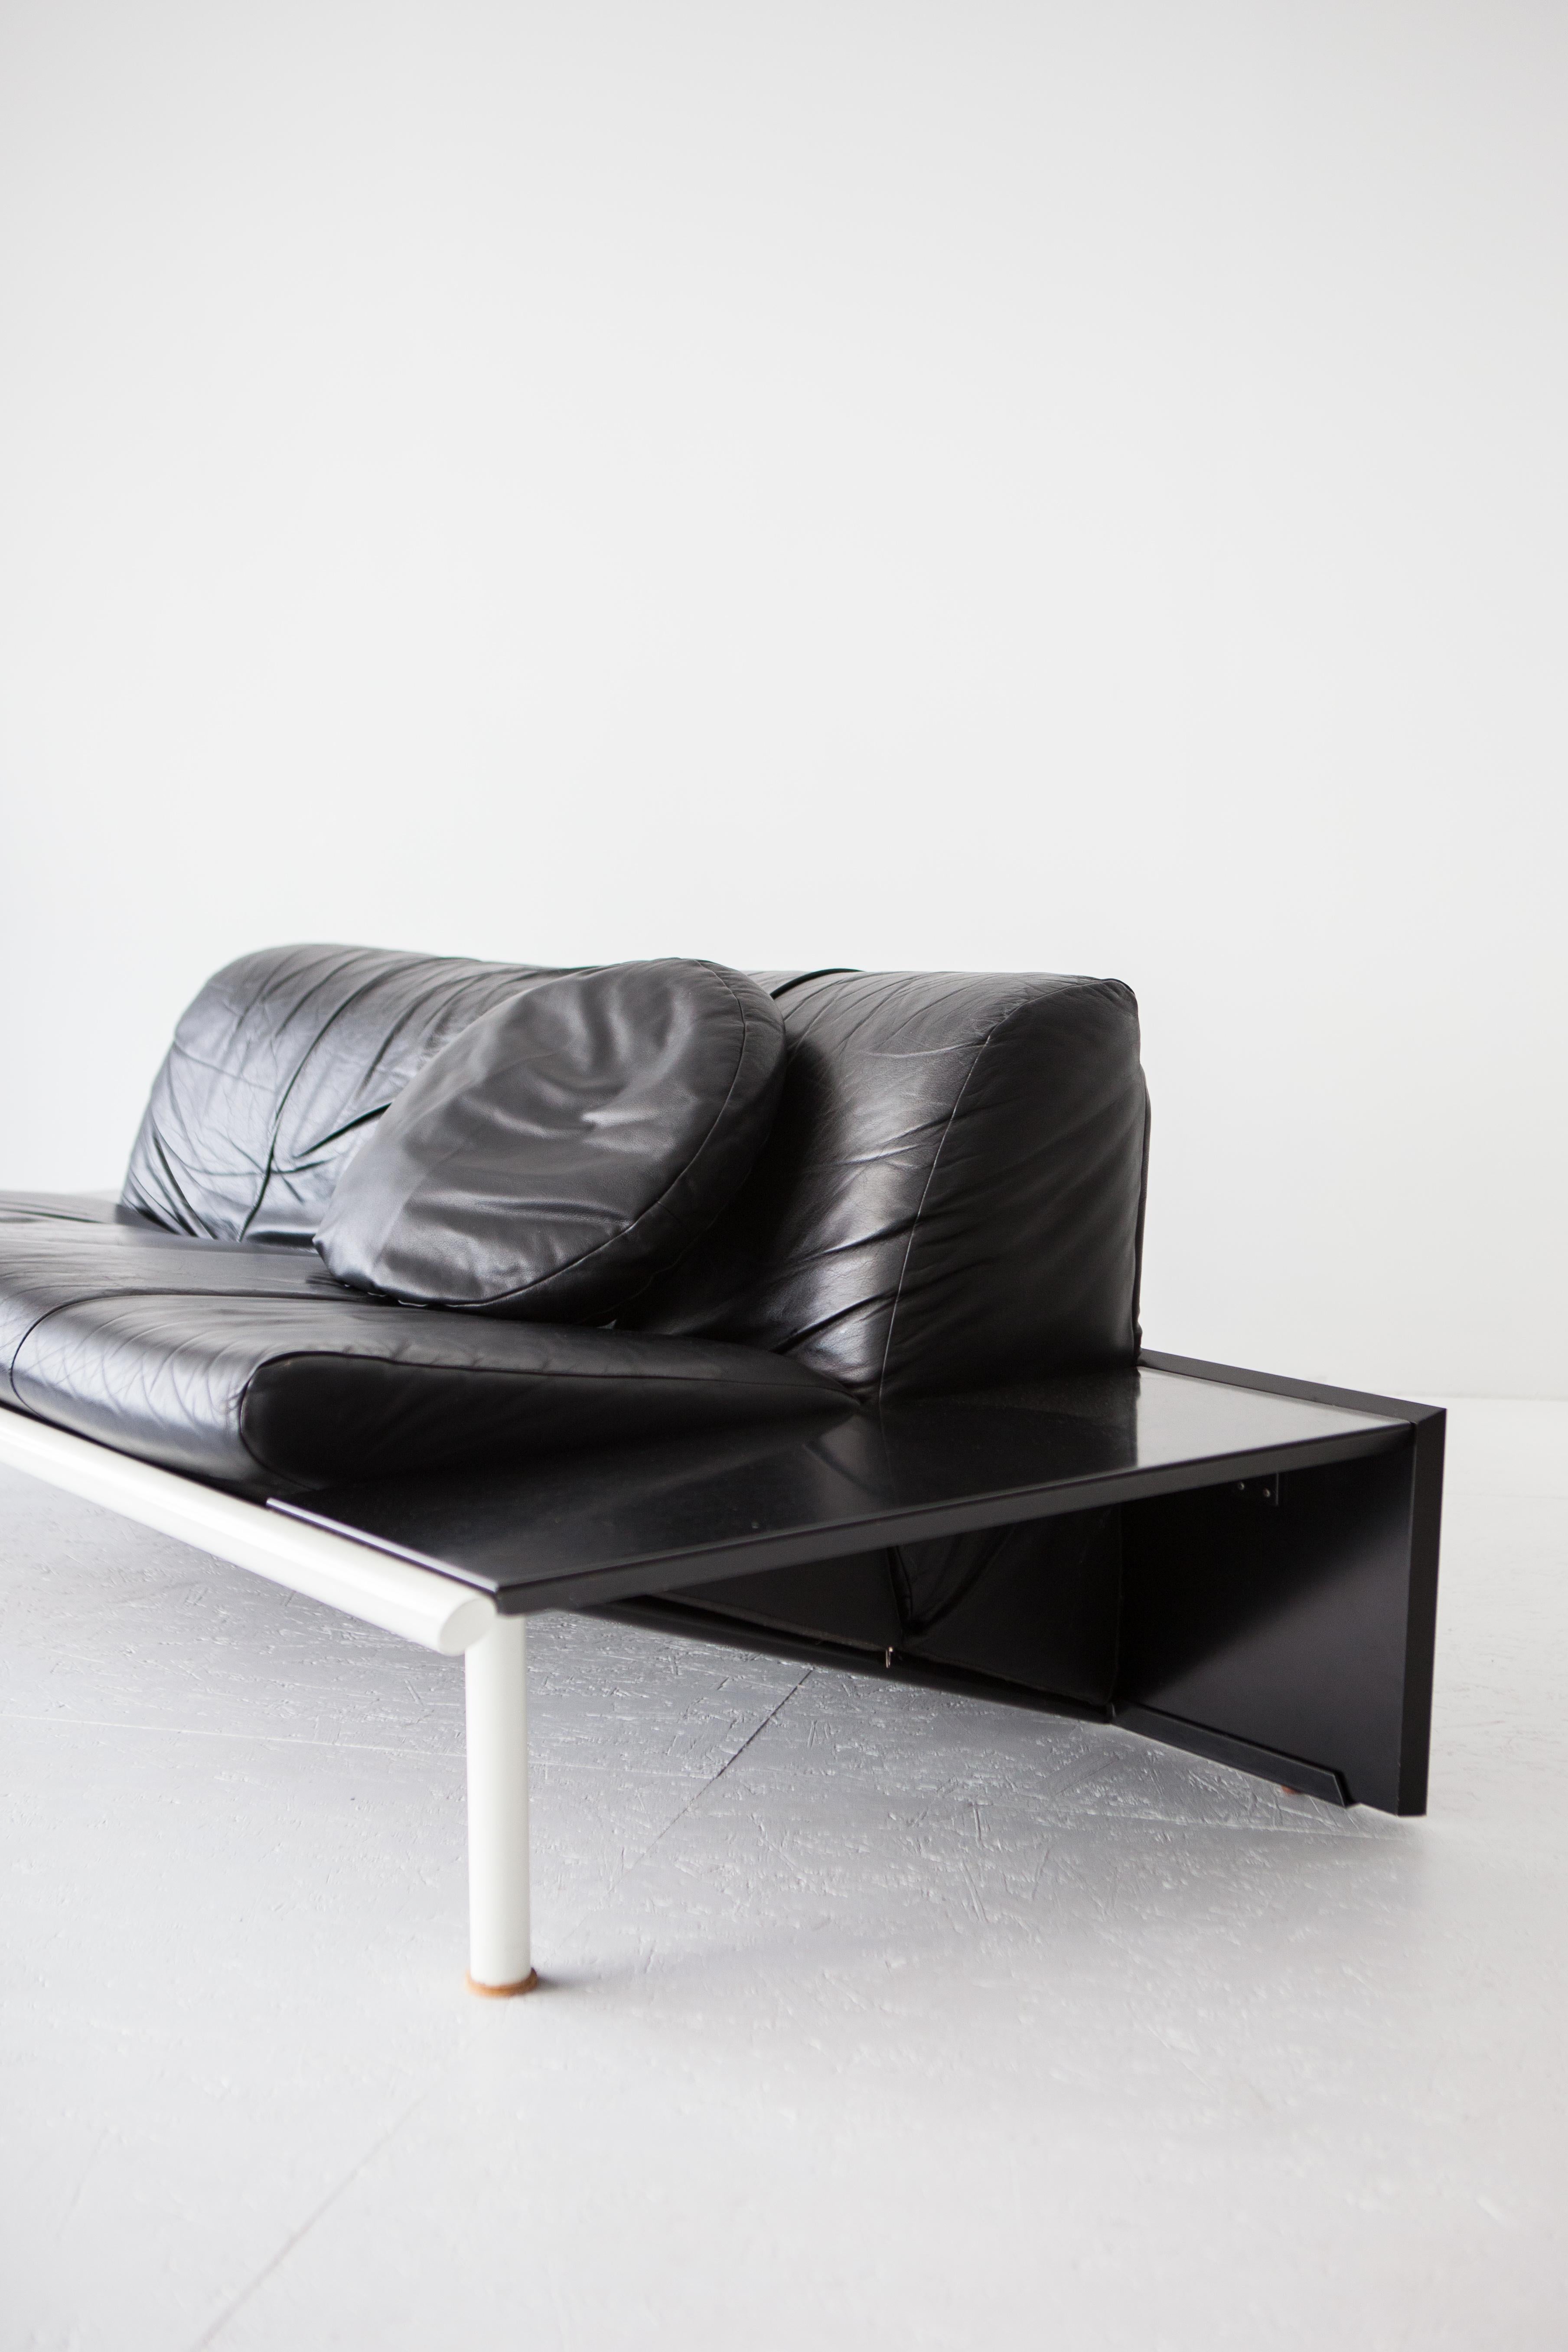 Post-Modern Harvink 'Mission' 2-seater sofa